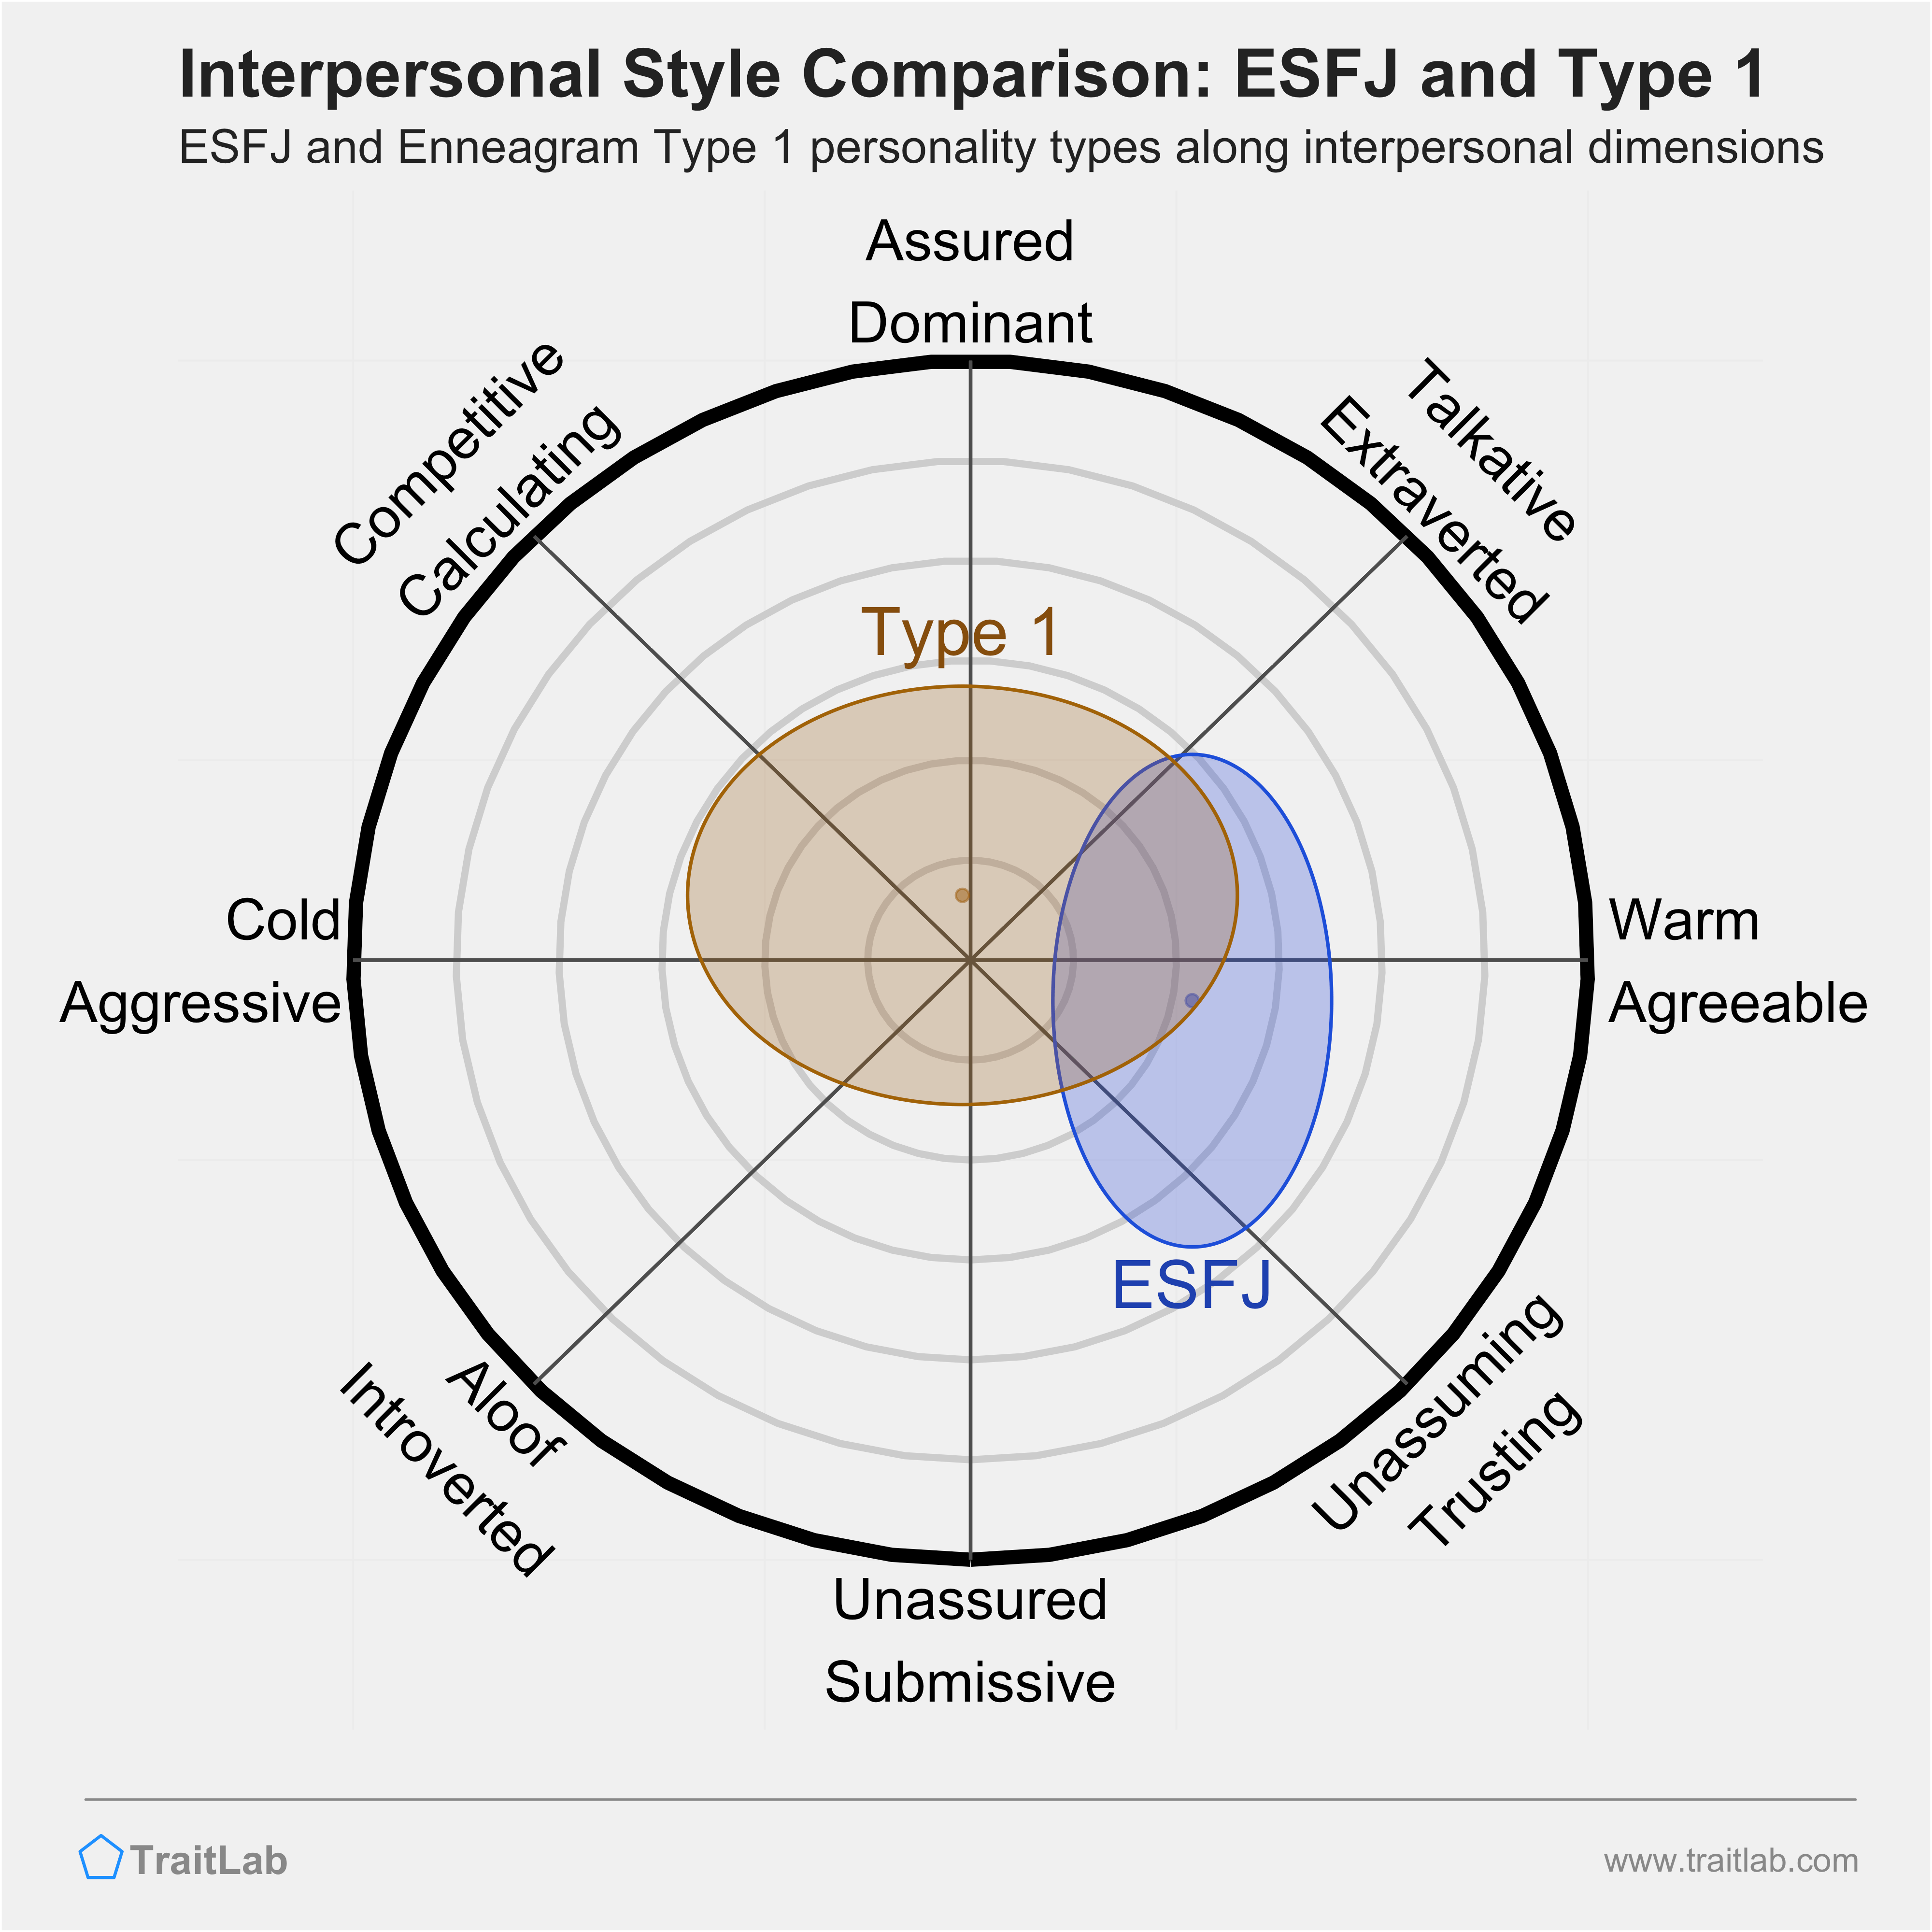 Enneagram ESFJ and Type 1 comparison across interpersonal dimensions